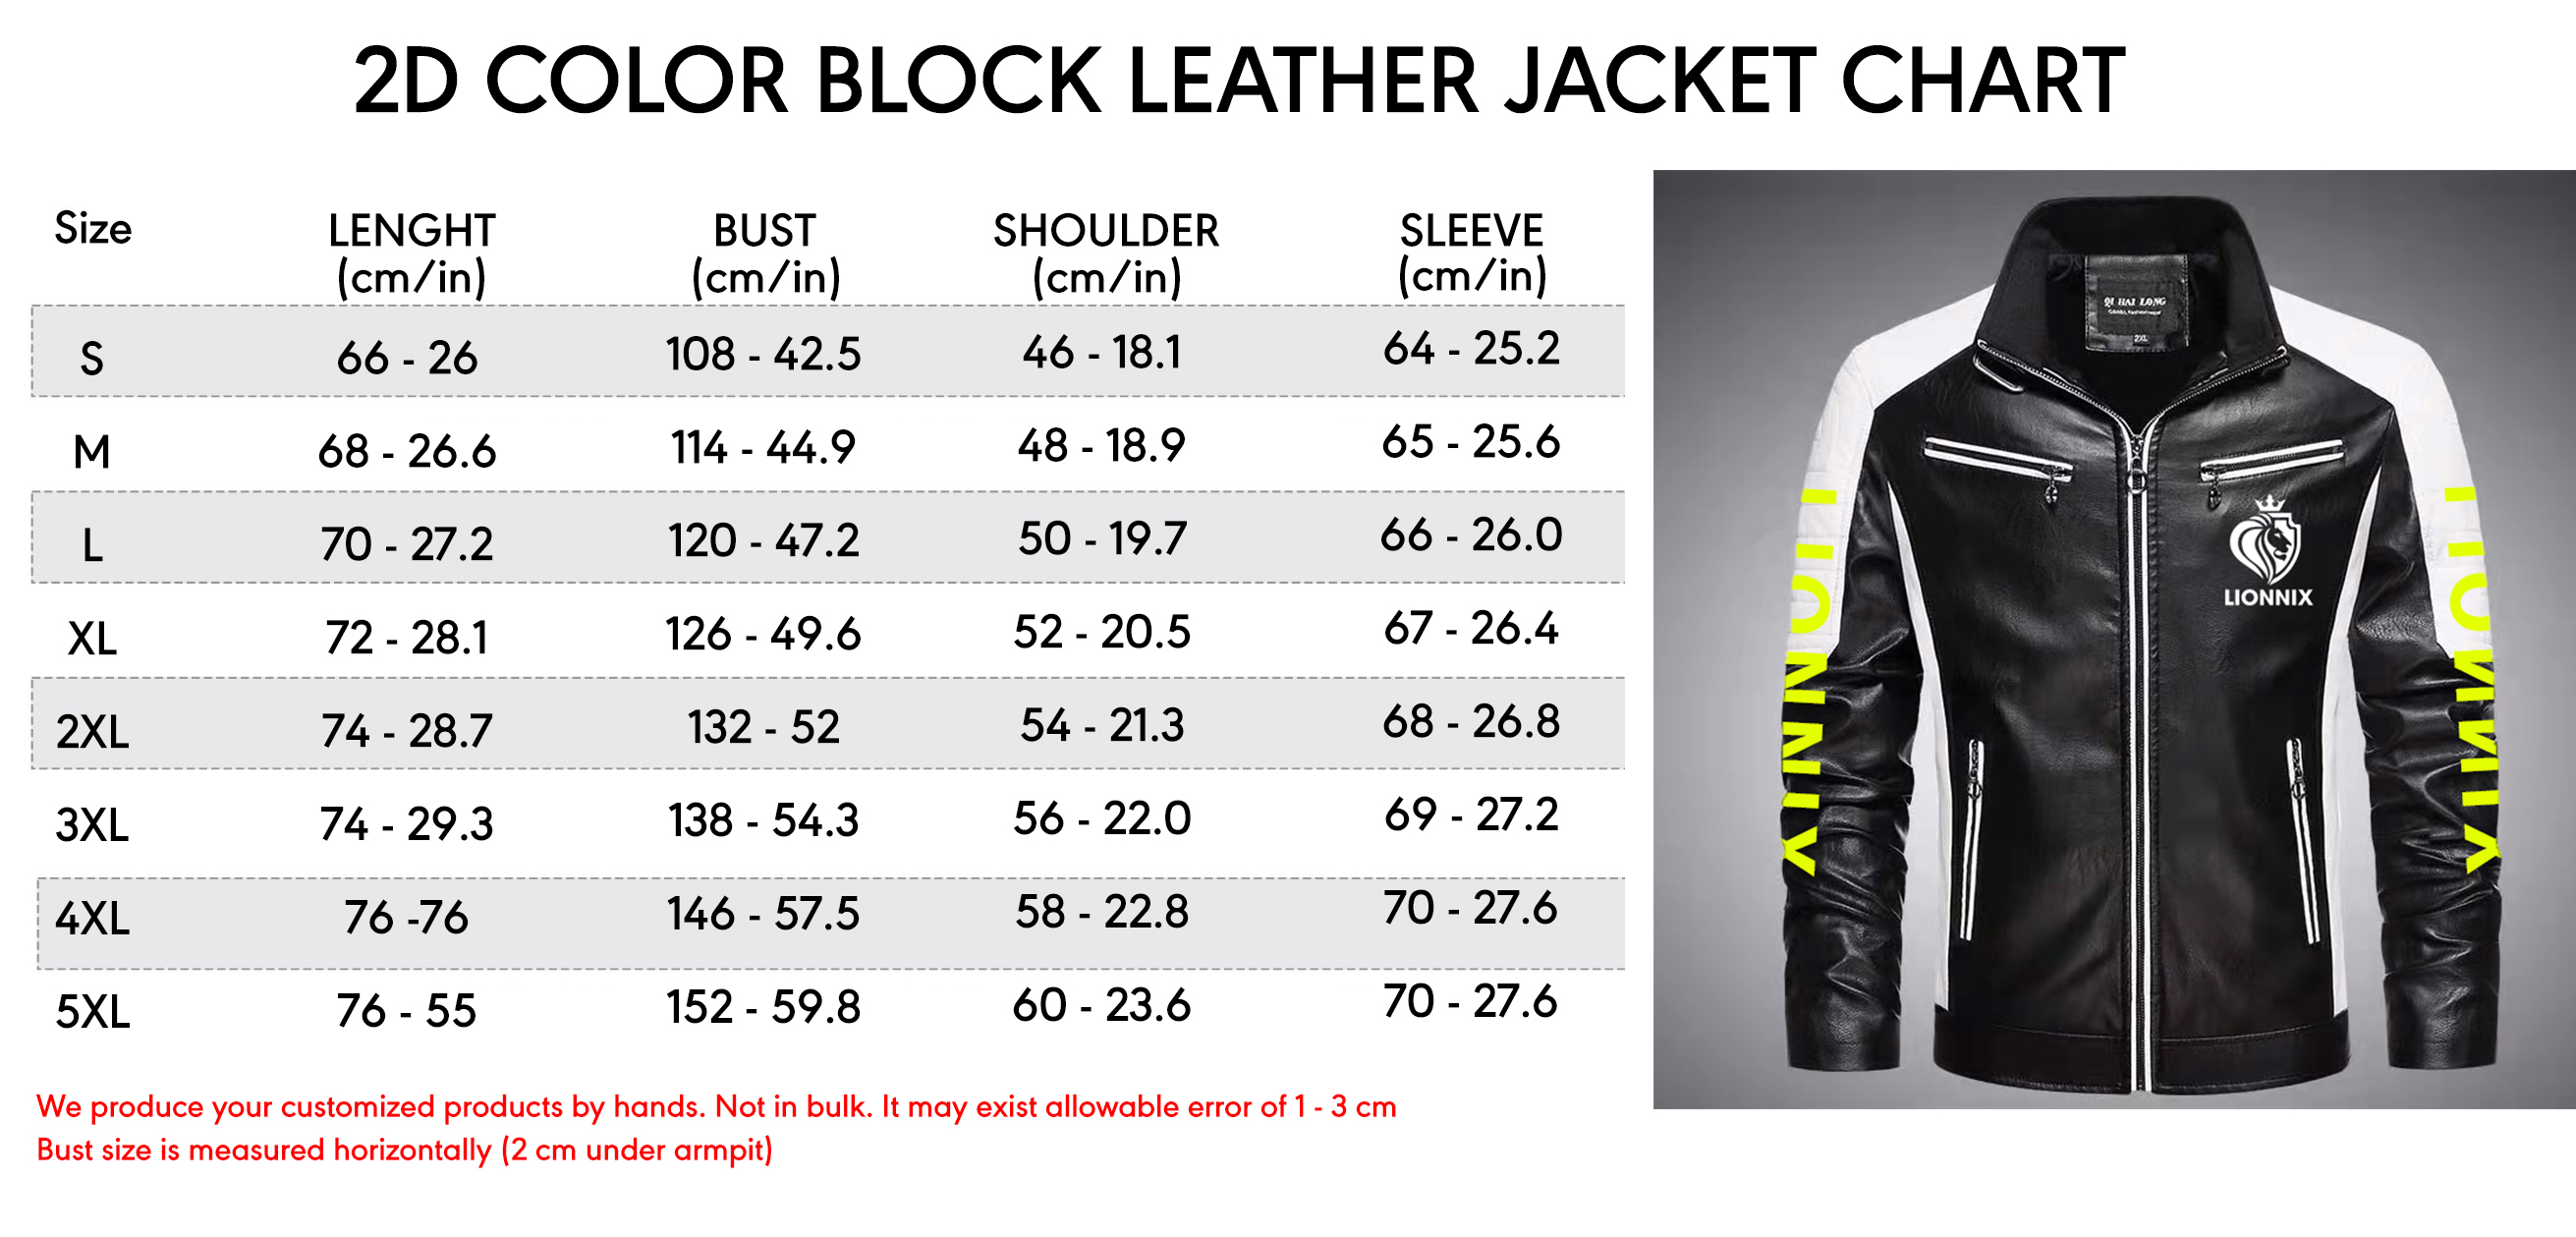 2d color block leather jacket size chart